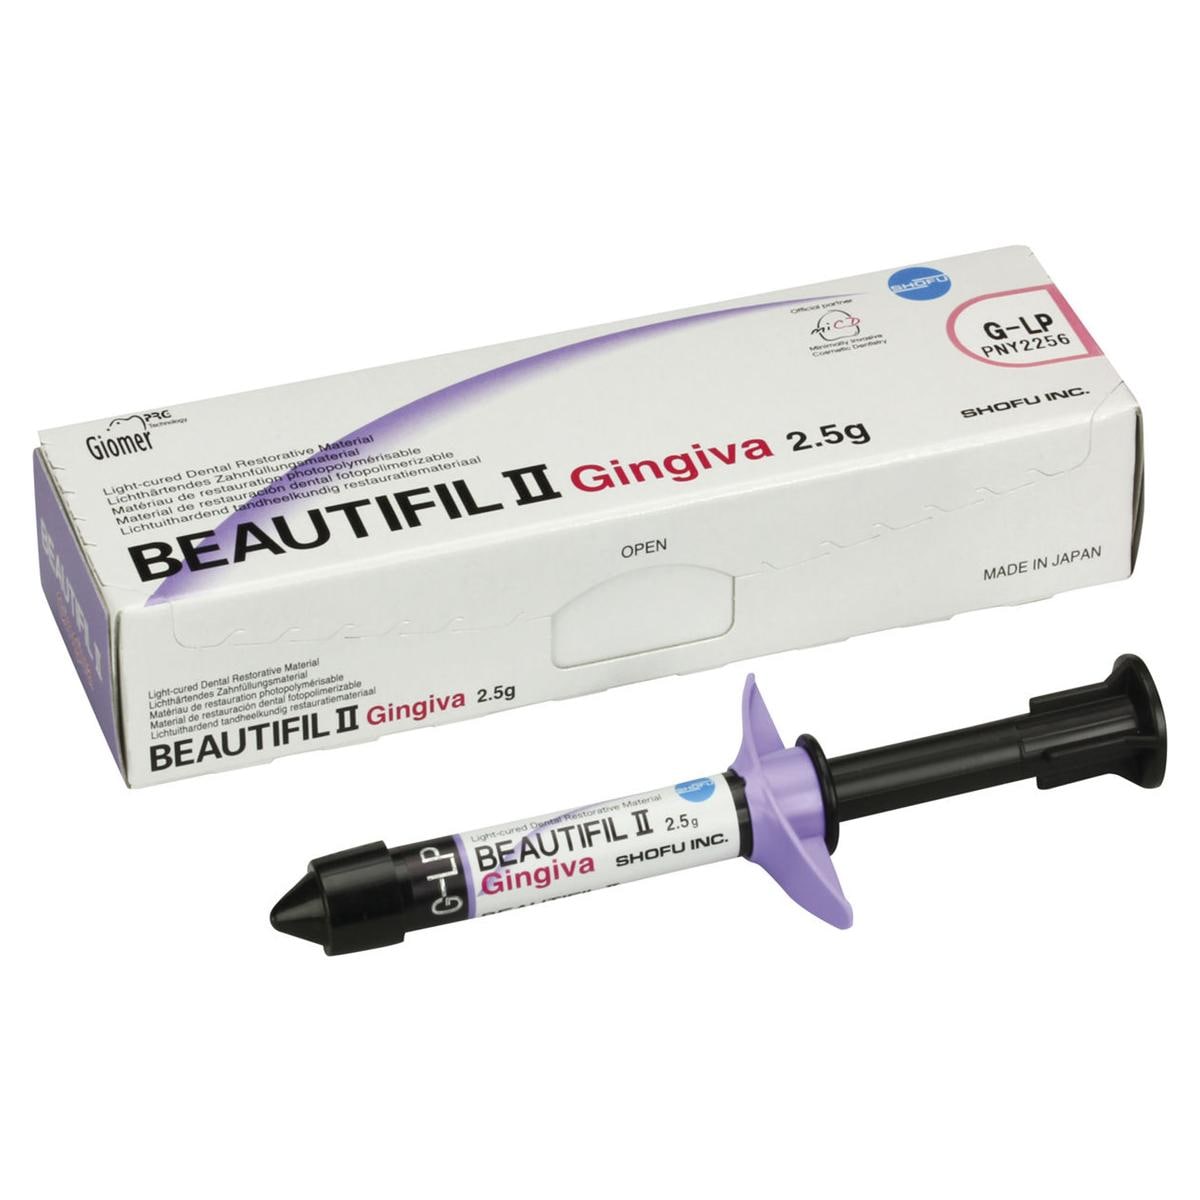 Beautifil ll Gingiva - Gum-LP (Light Pink), Spritze 2,5 g